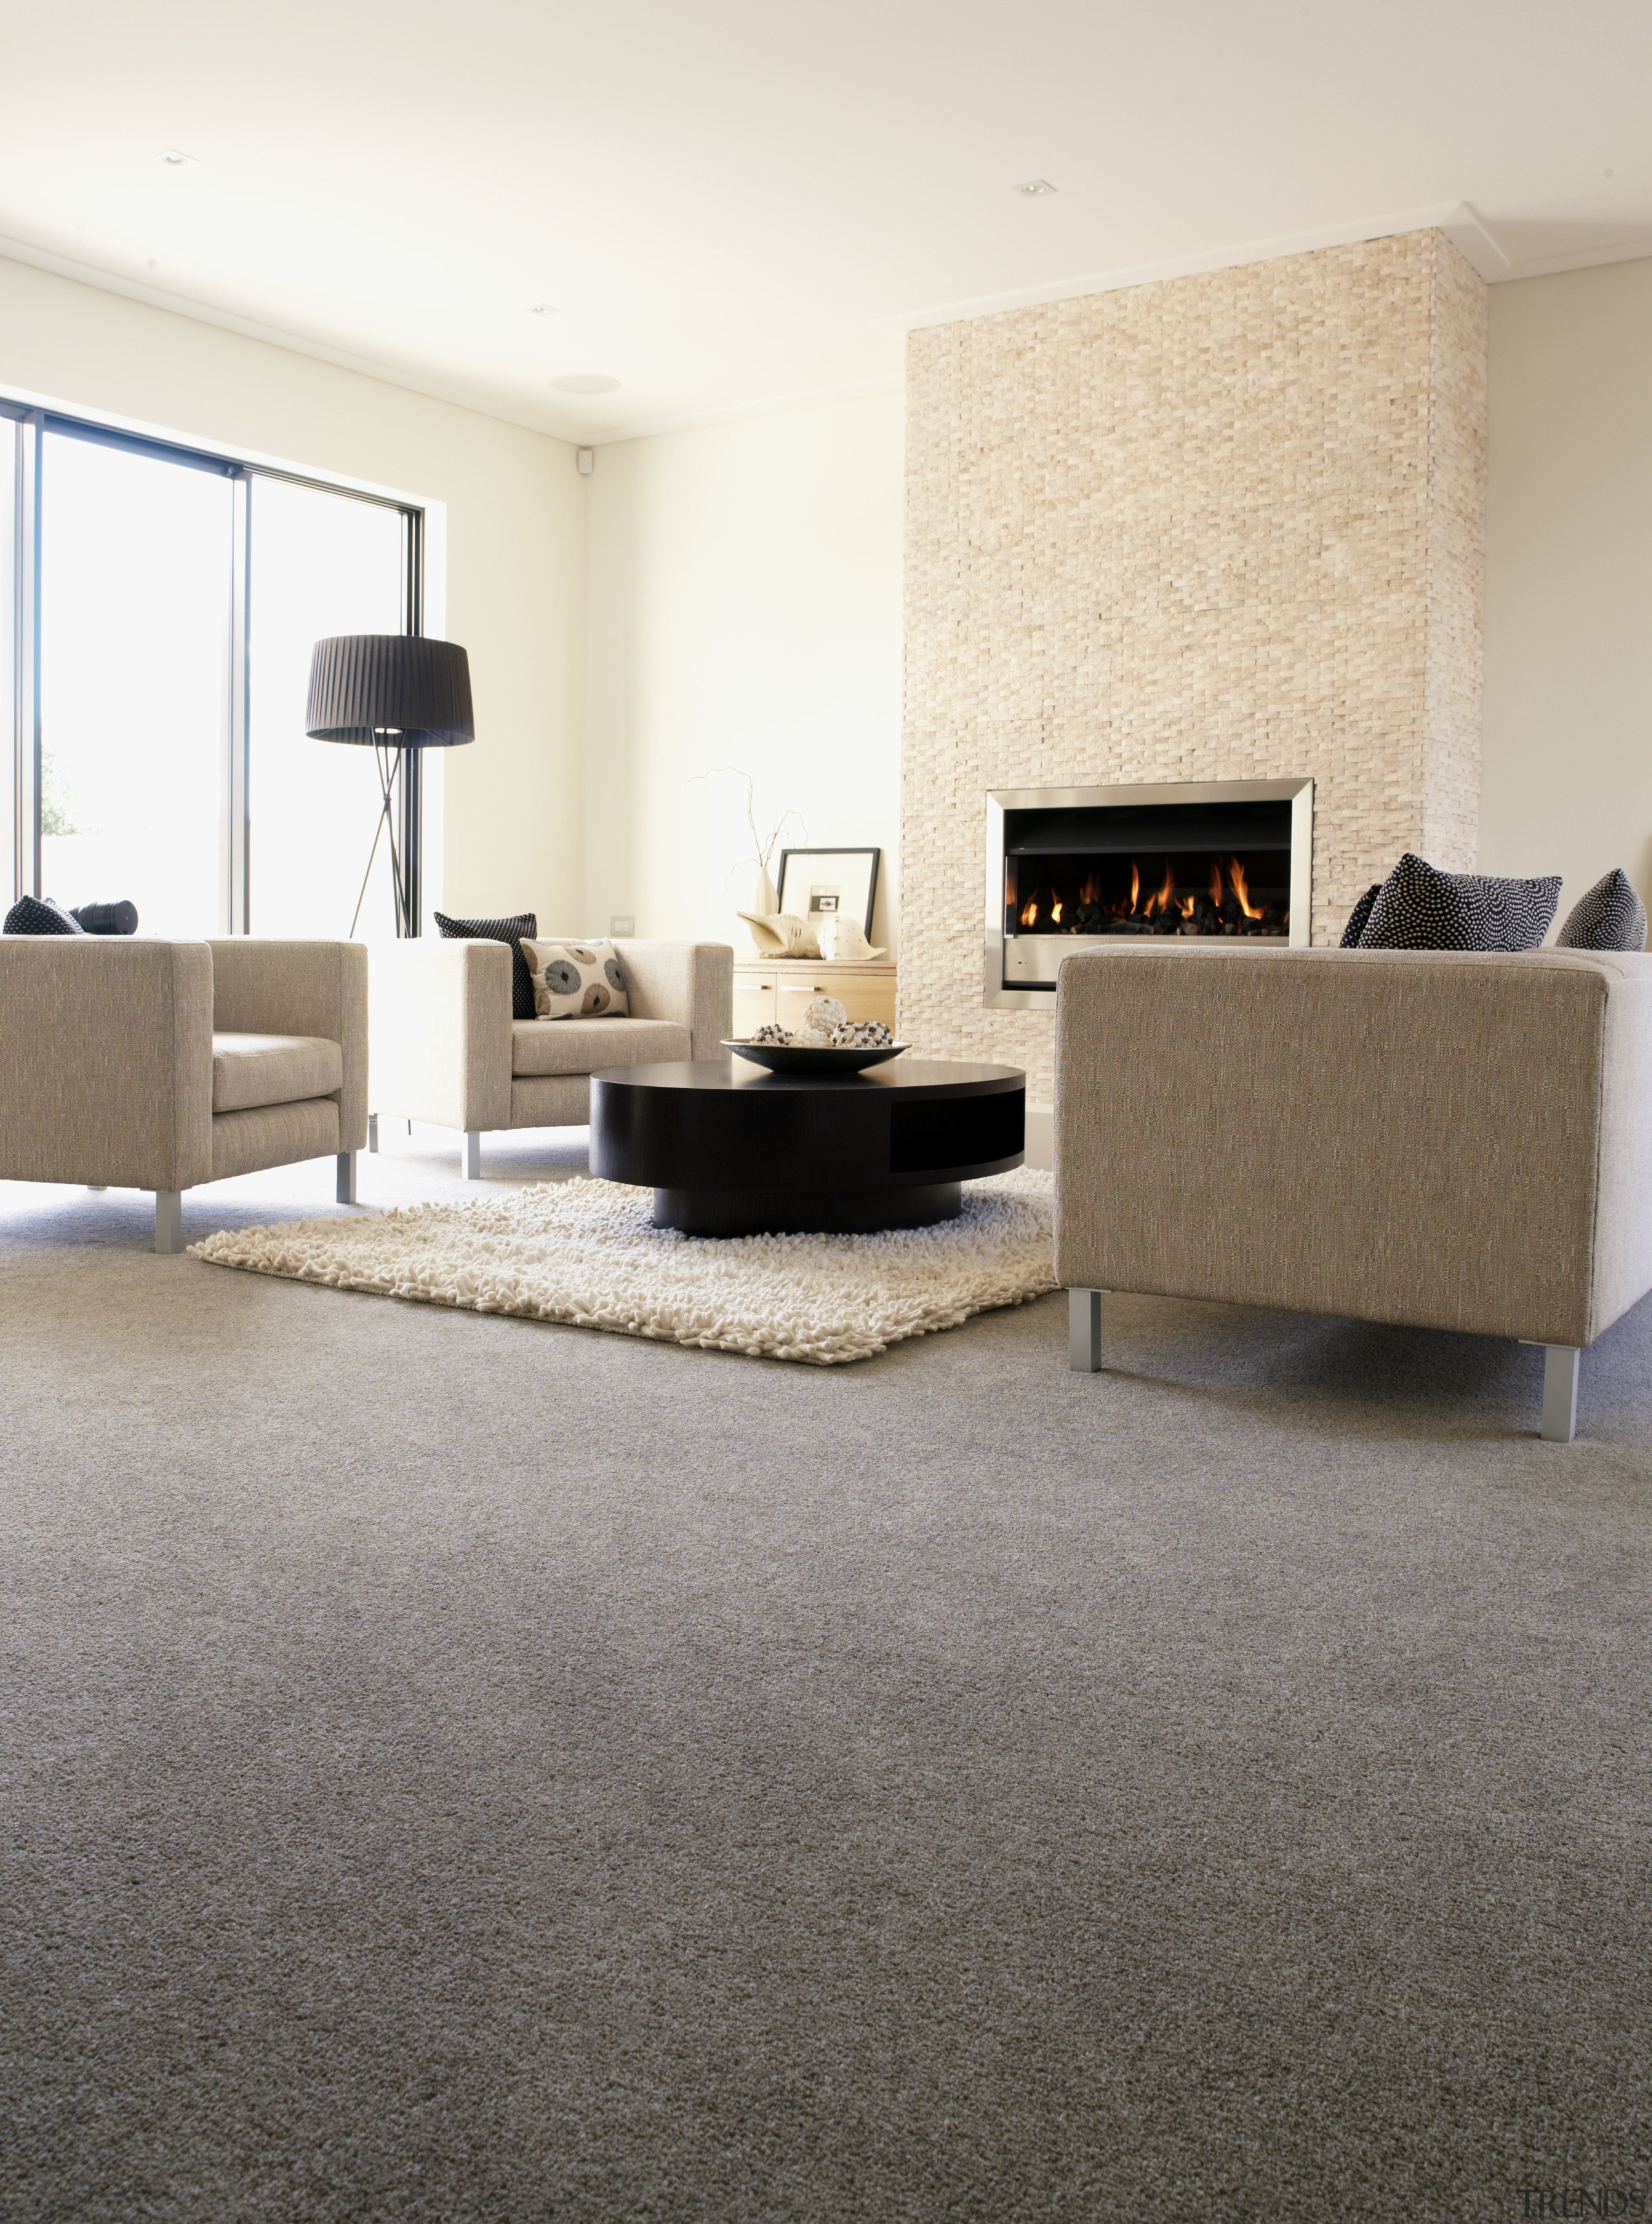 Feltex Carpets Classic Cayenne in colour Grey Mood carpet, floor, flooring, furniture, hardwood, home, interior design, laminate flooring, living room, product design, real estate, room, table, tile, wall, wood, wood flooring, white, gray